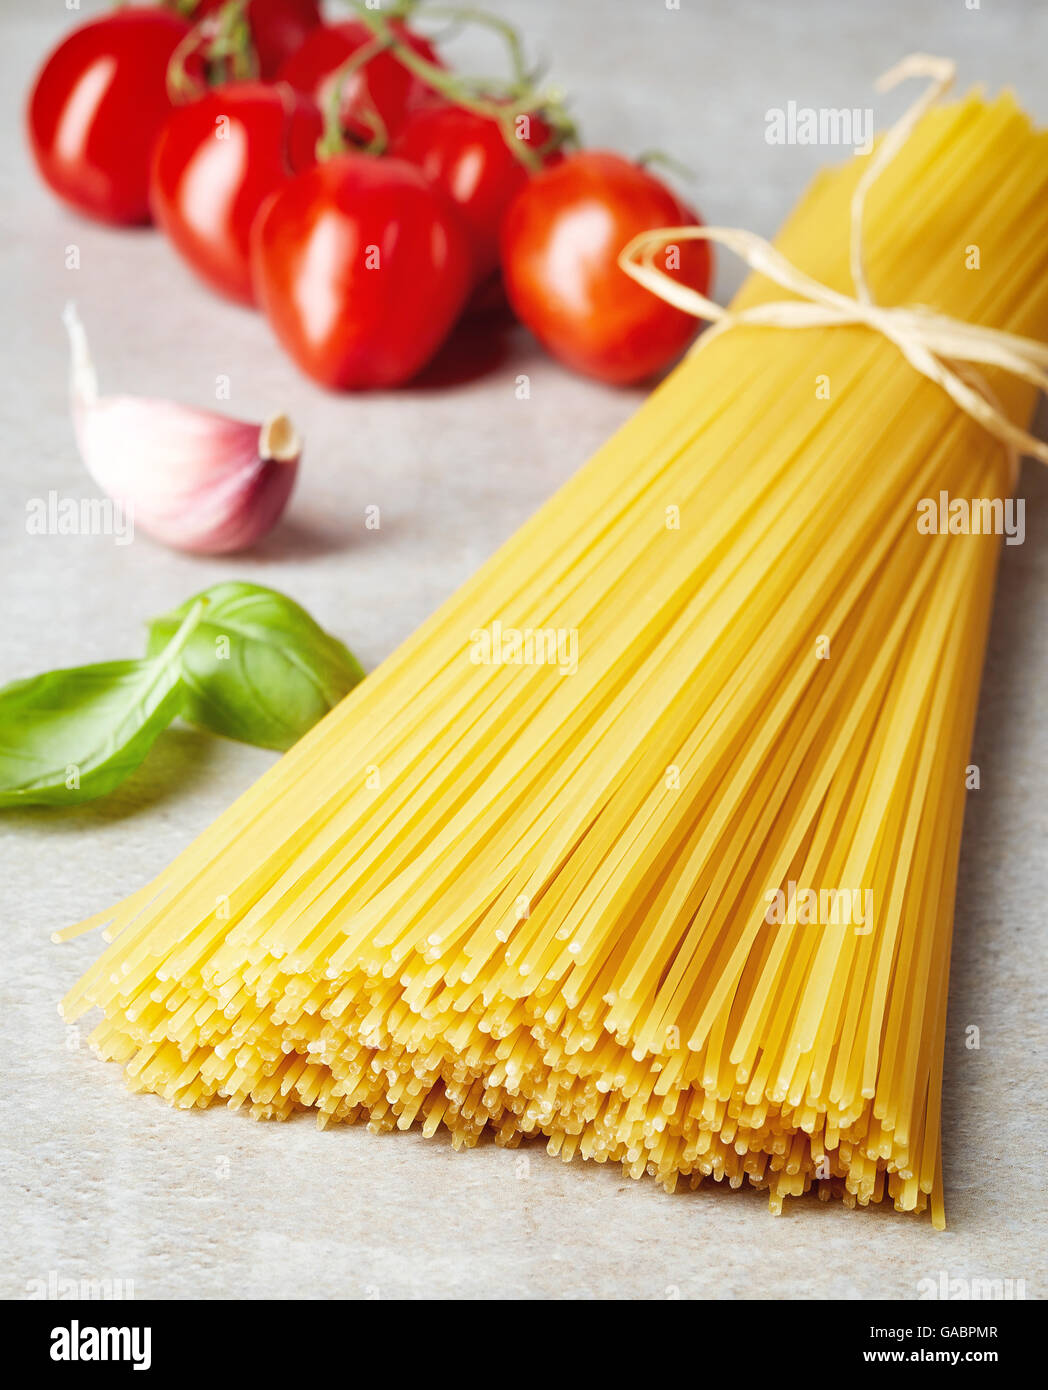 Spaghetti pasta, tomato, garlic and basil leaves on grey stone table Stock Photo